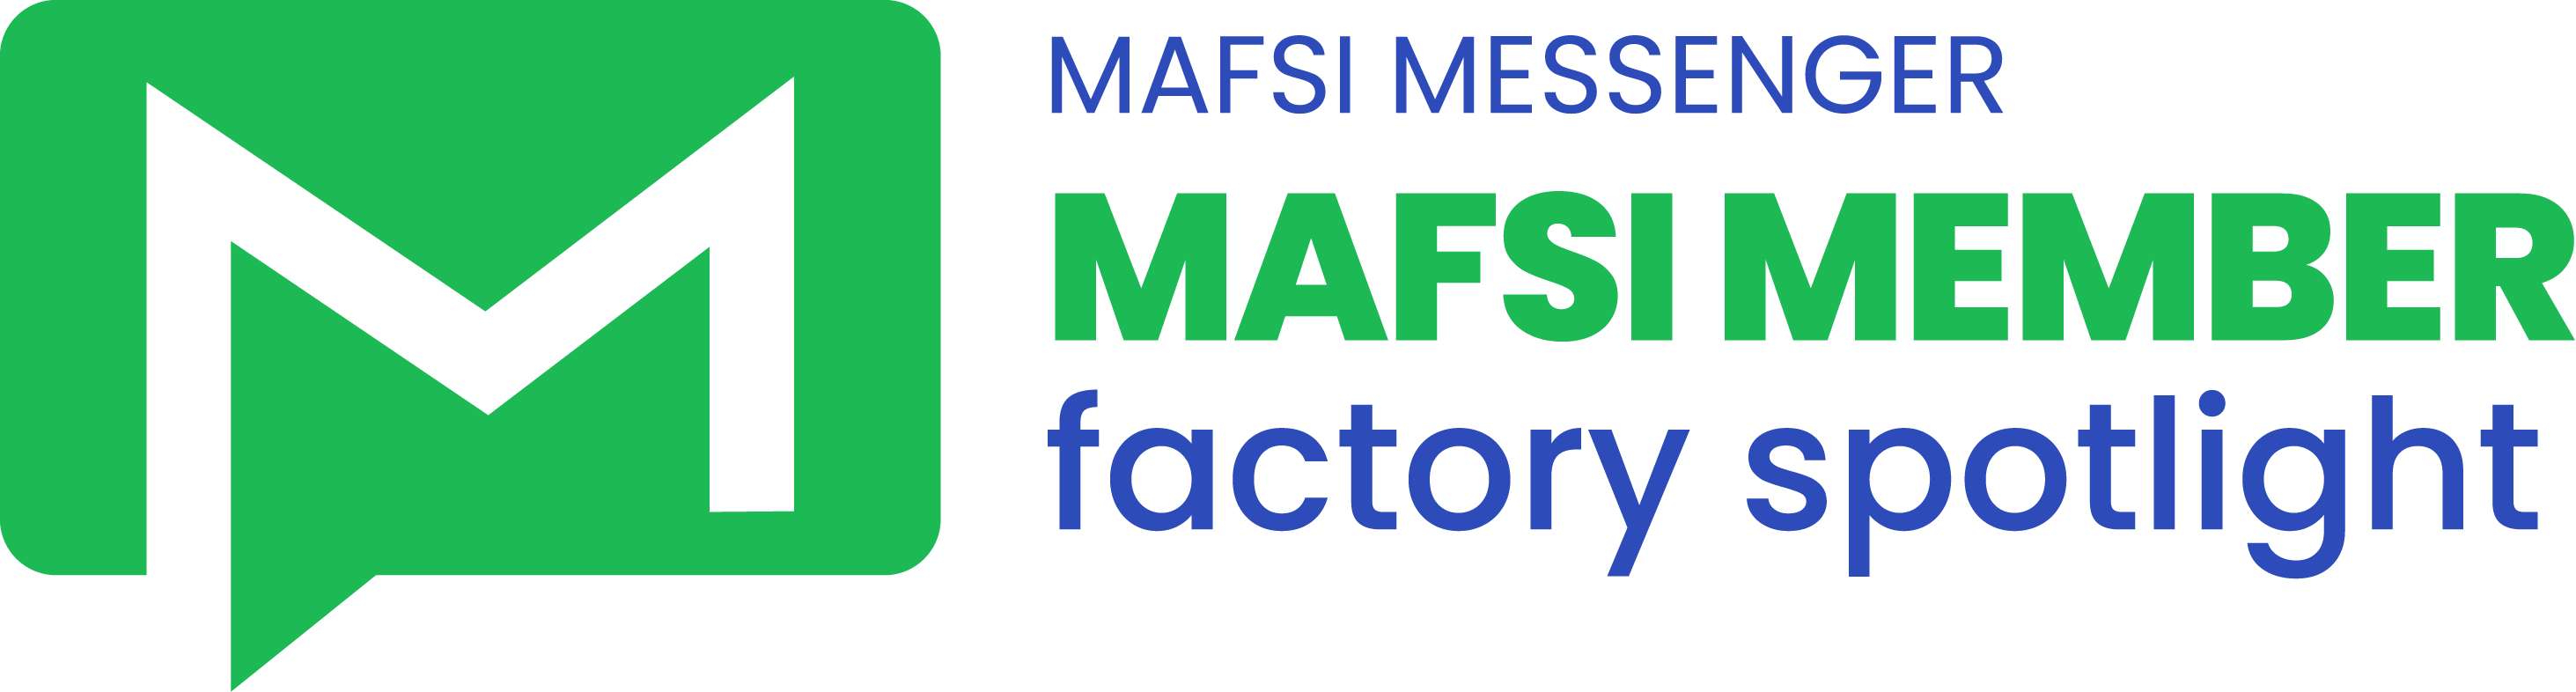 Mafsi Messenger Blog Banners v4 committee revised Tight to Artboards_MAFSI messenger Mfg Member Spotlight